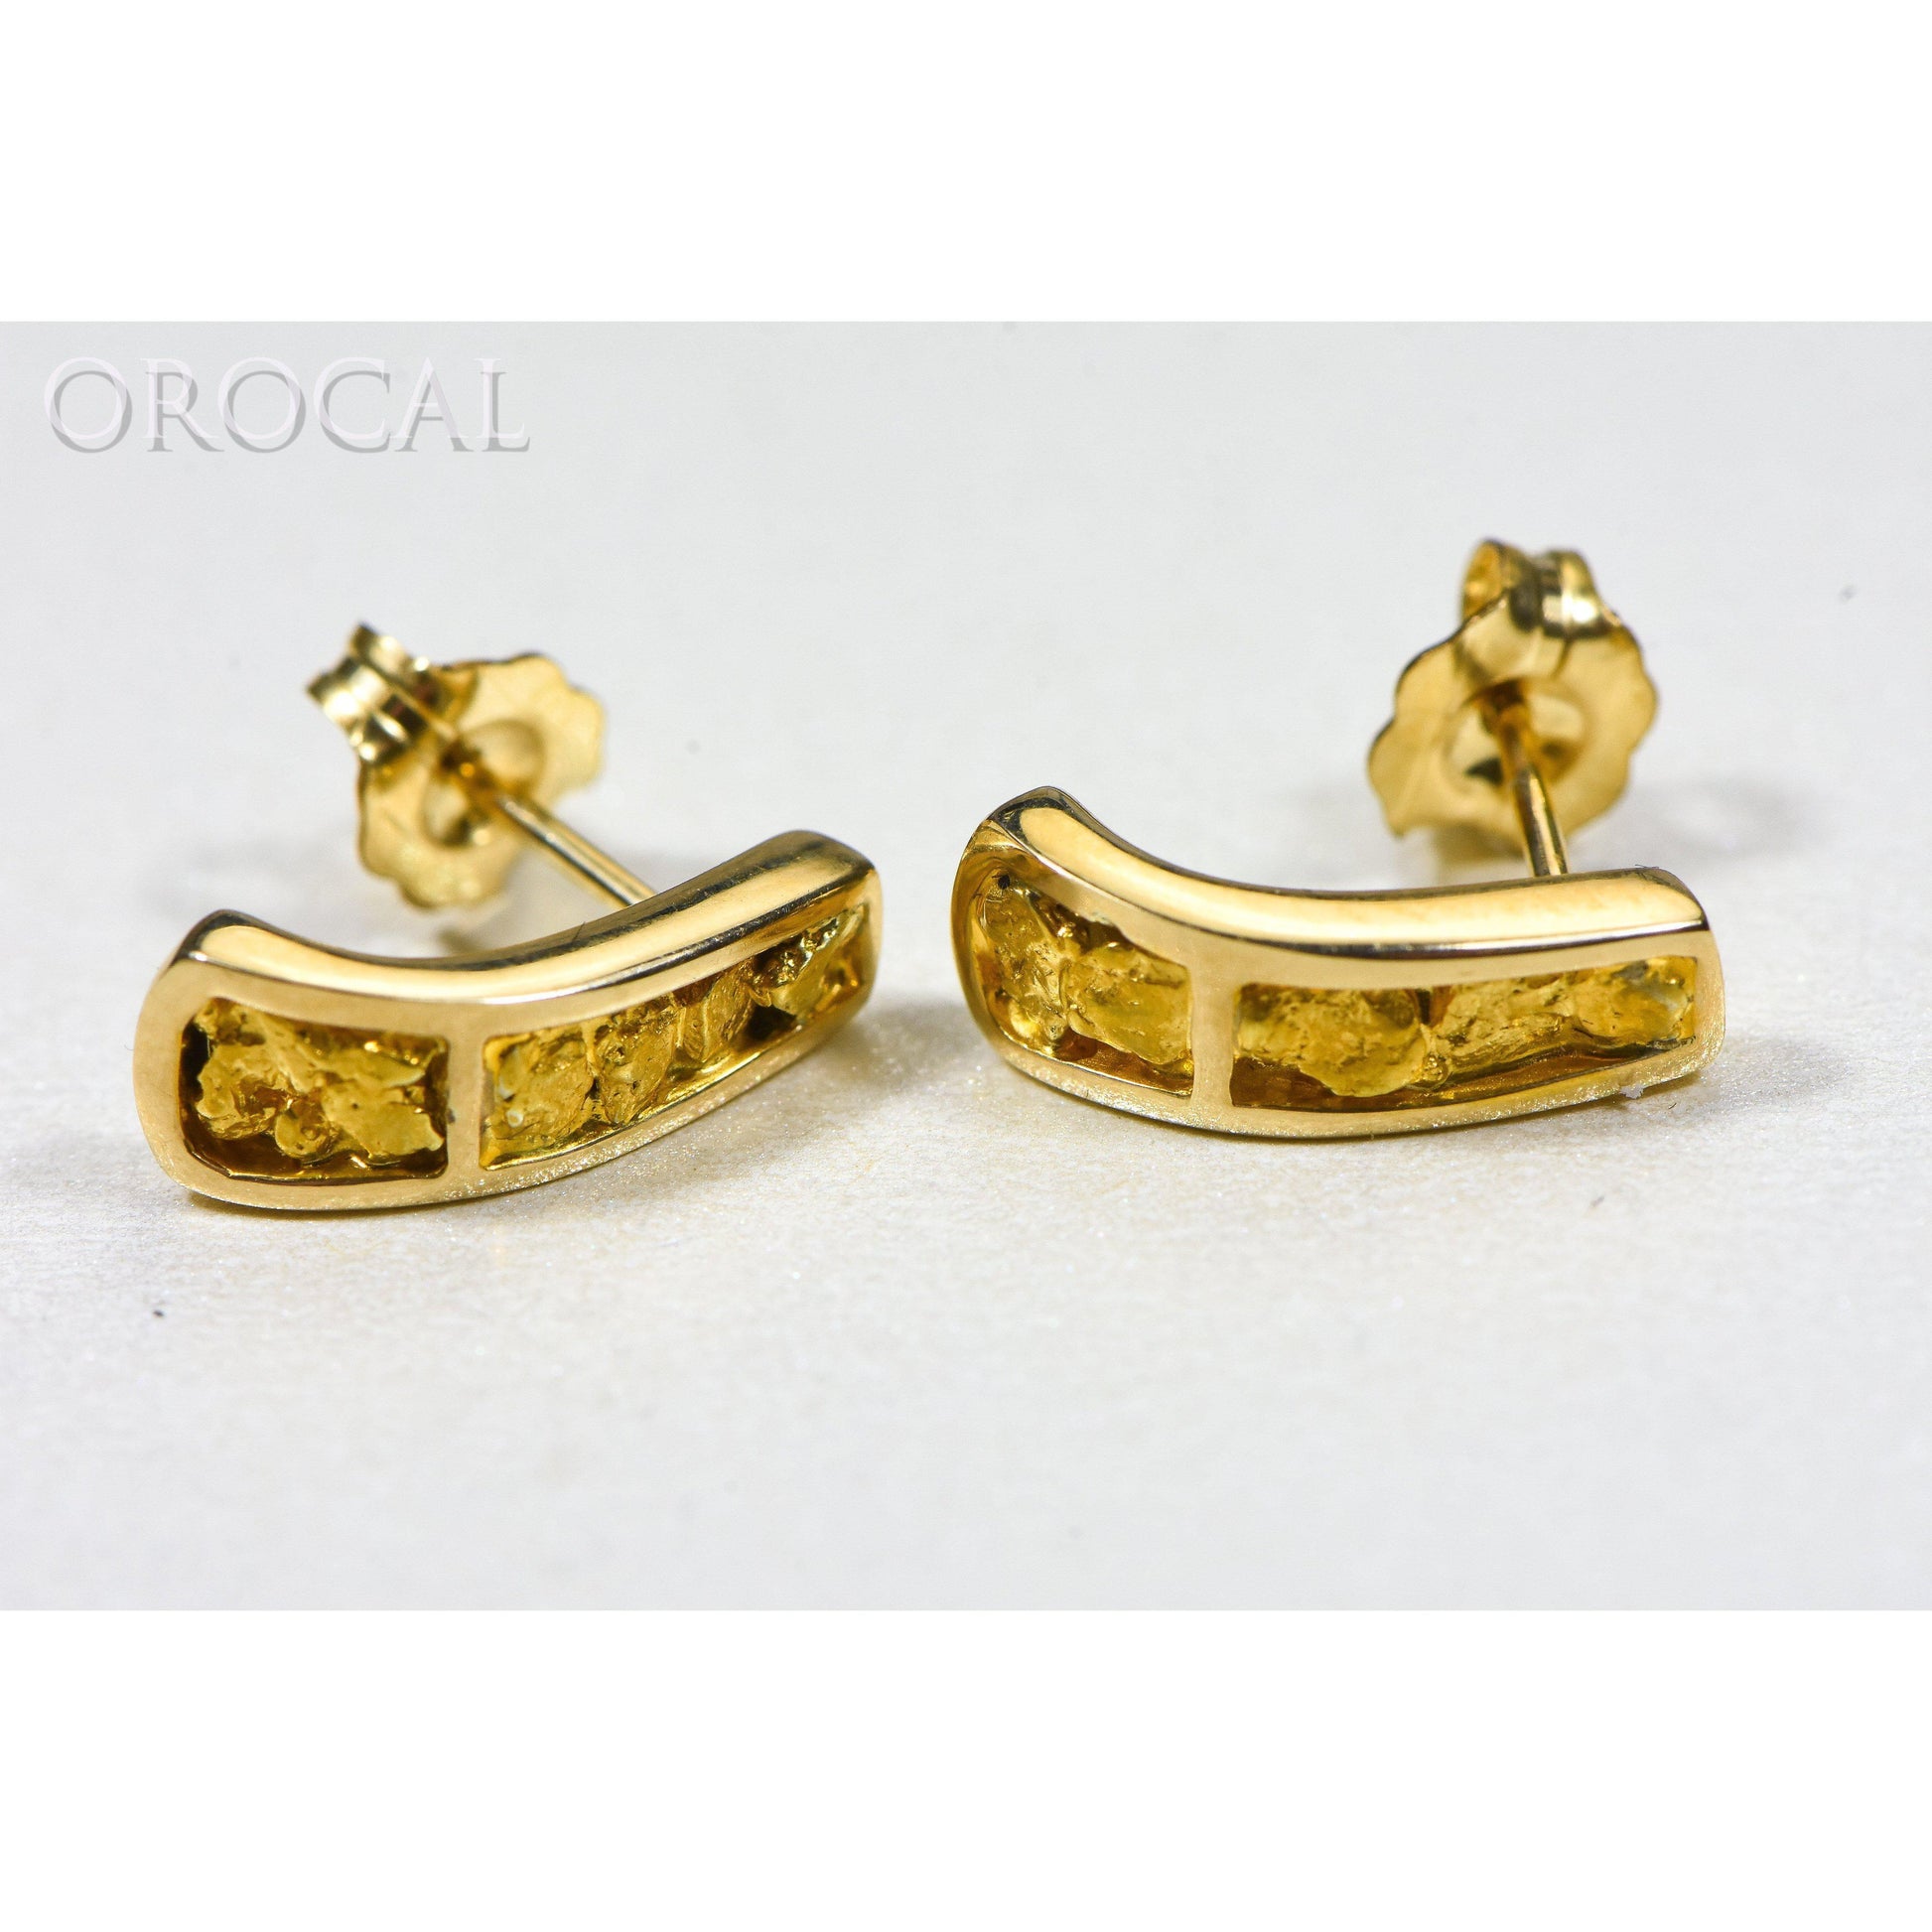 Gold Nugget Earrings - EH41N-Destination Gold Detectors